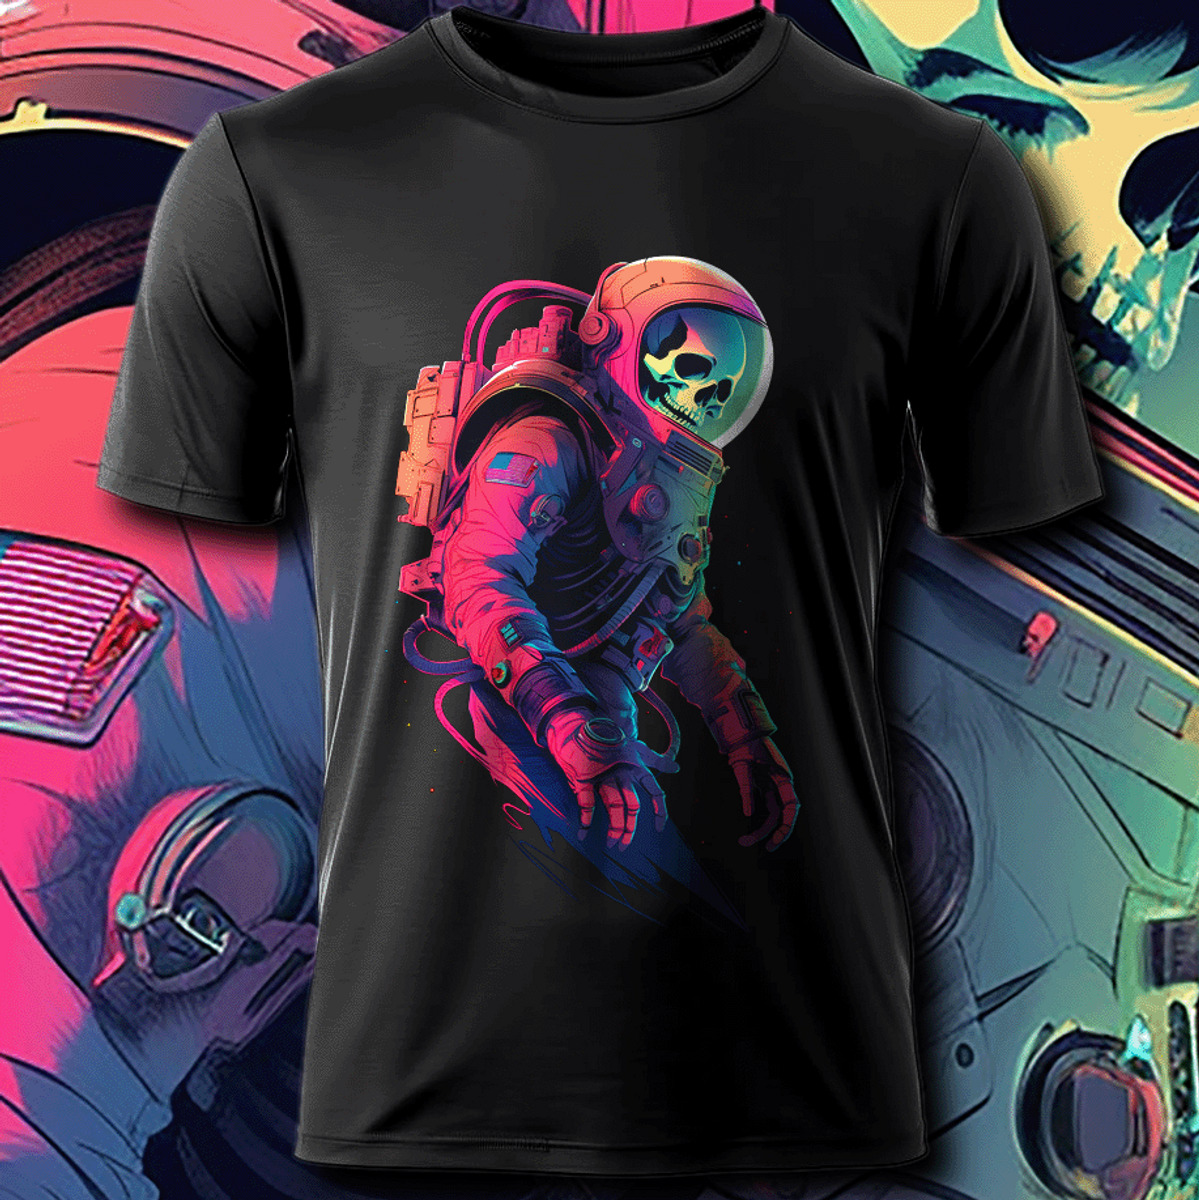 Nome do produto: Camiseta Skull Astronauta